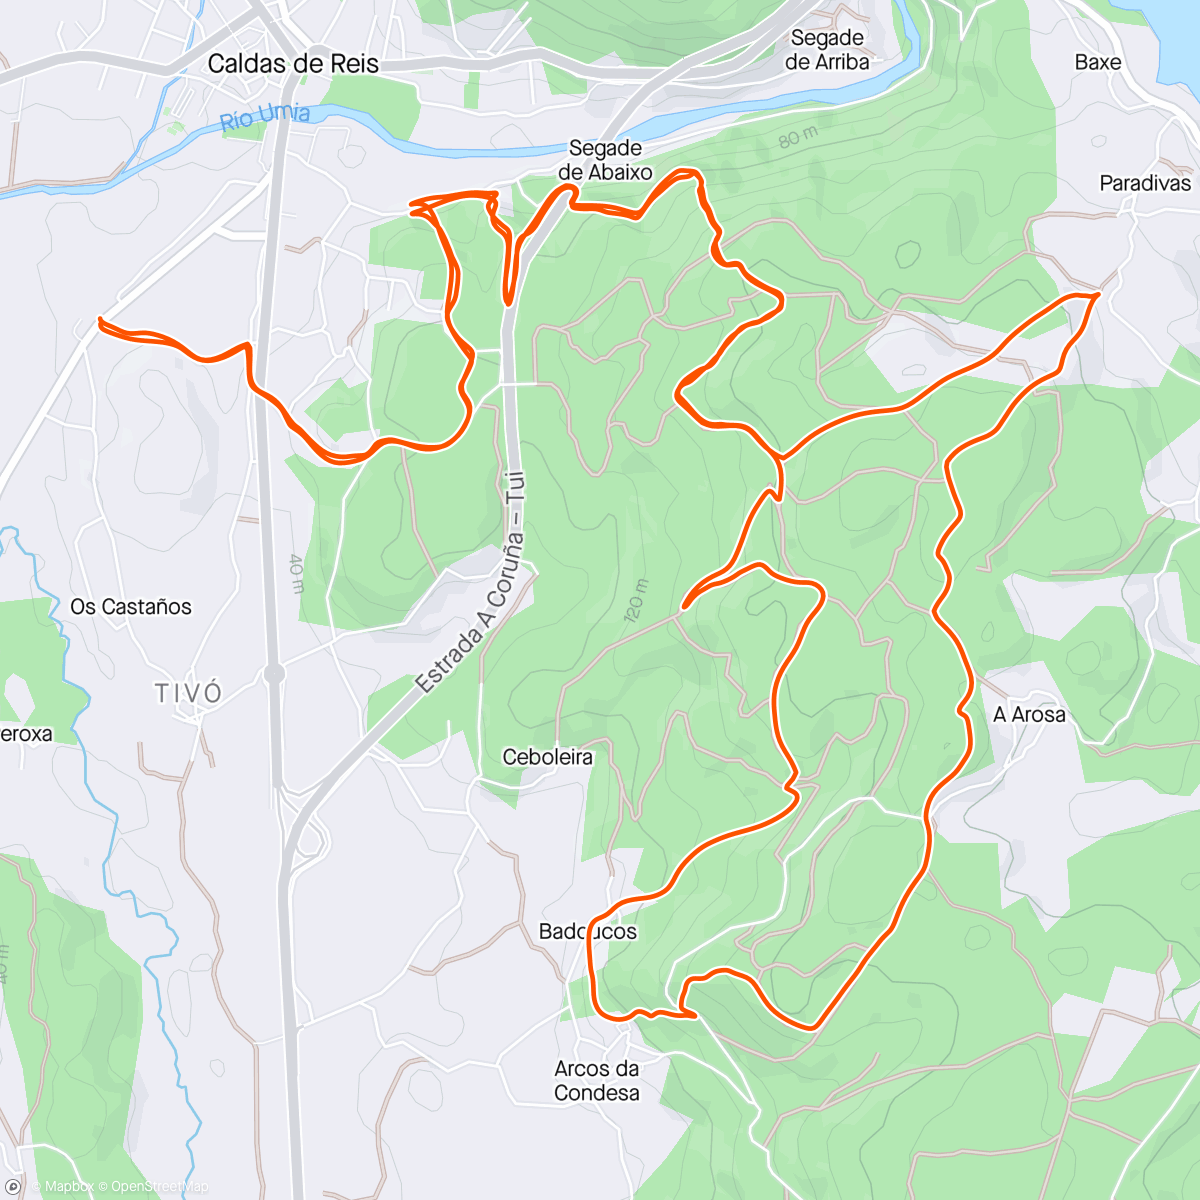 Map of the activity, Carrera de montaña por la tarde
https://trailvilatuxe.ccnorte.com/